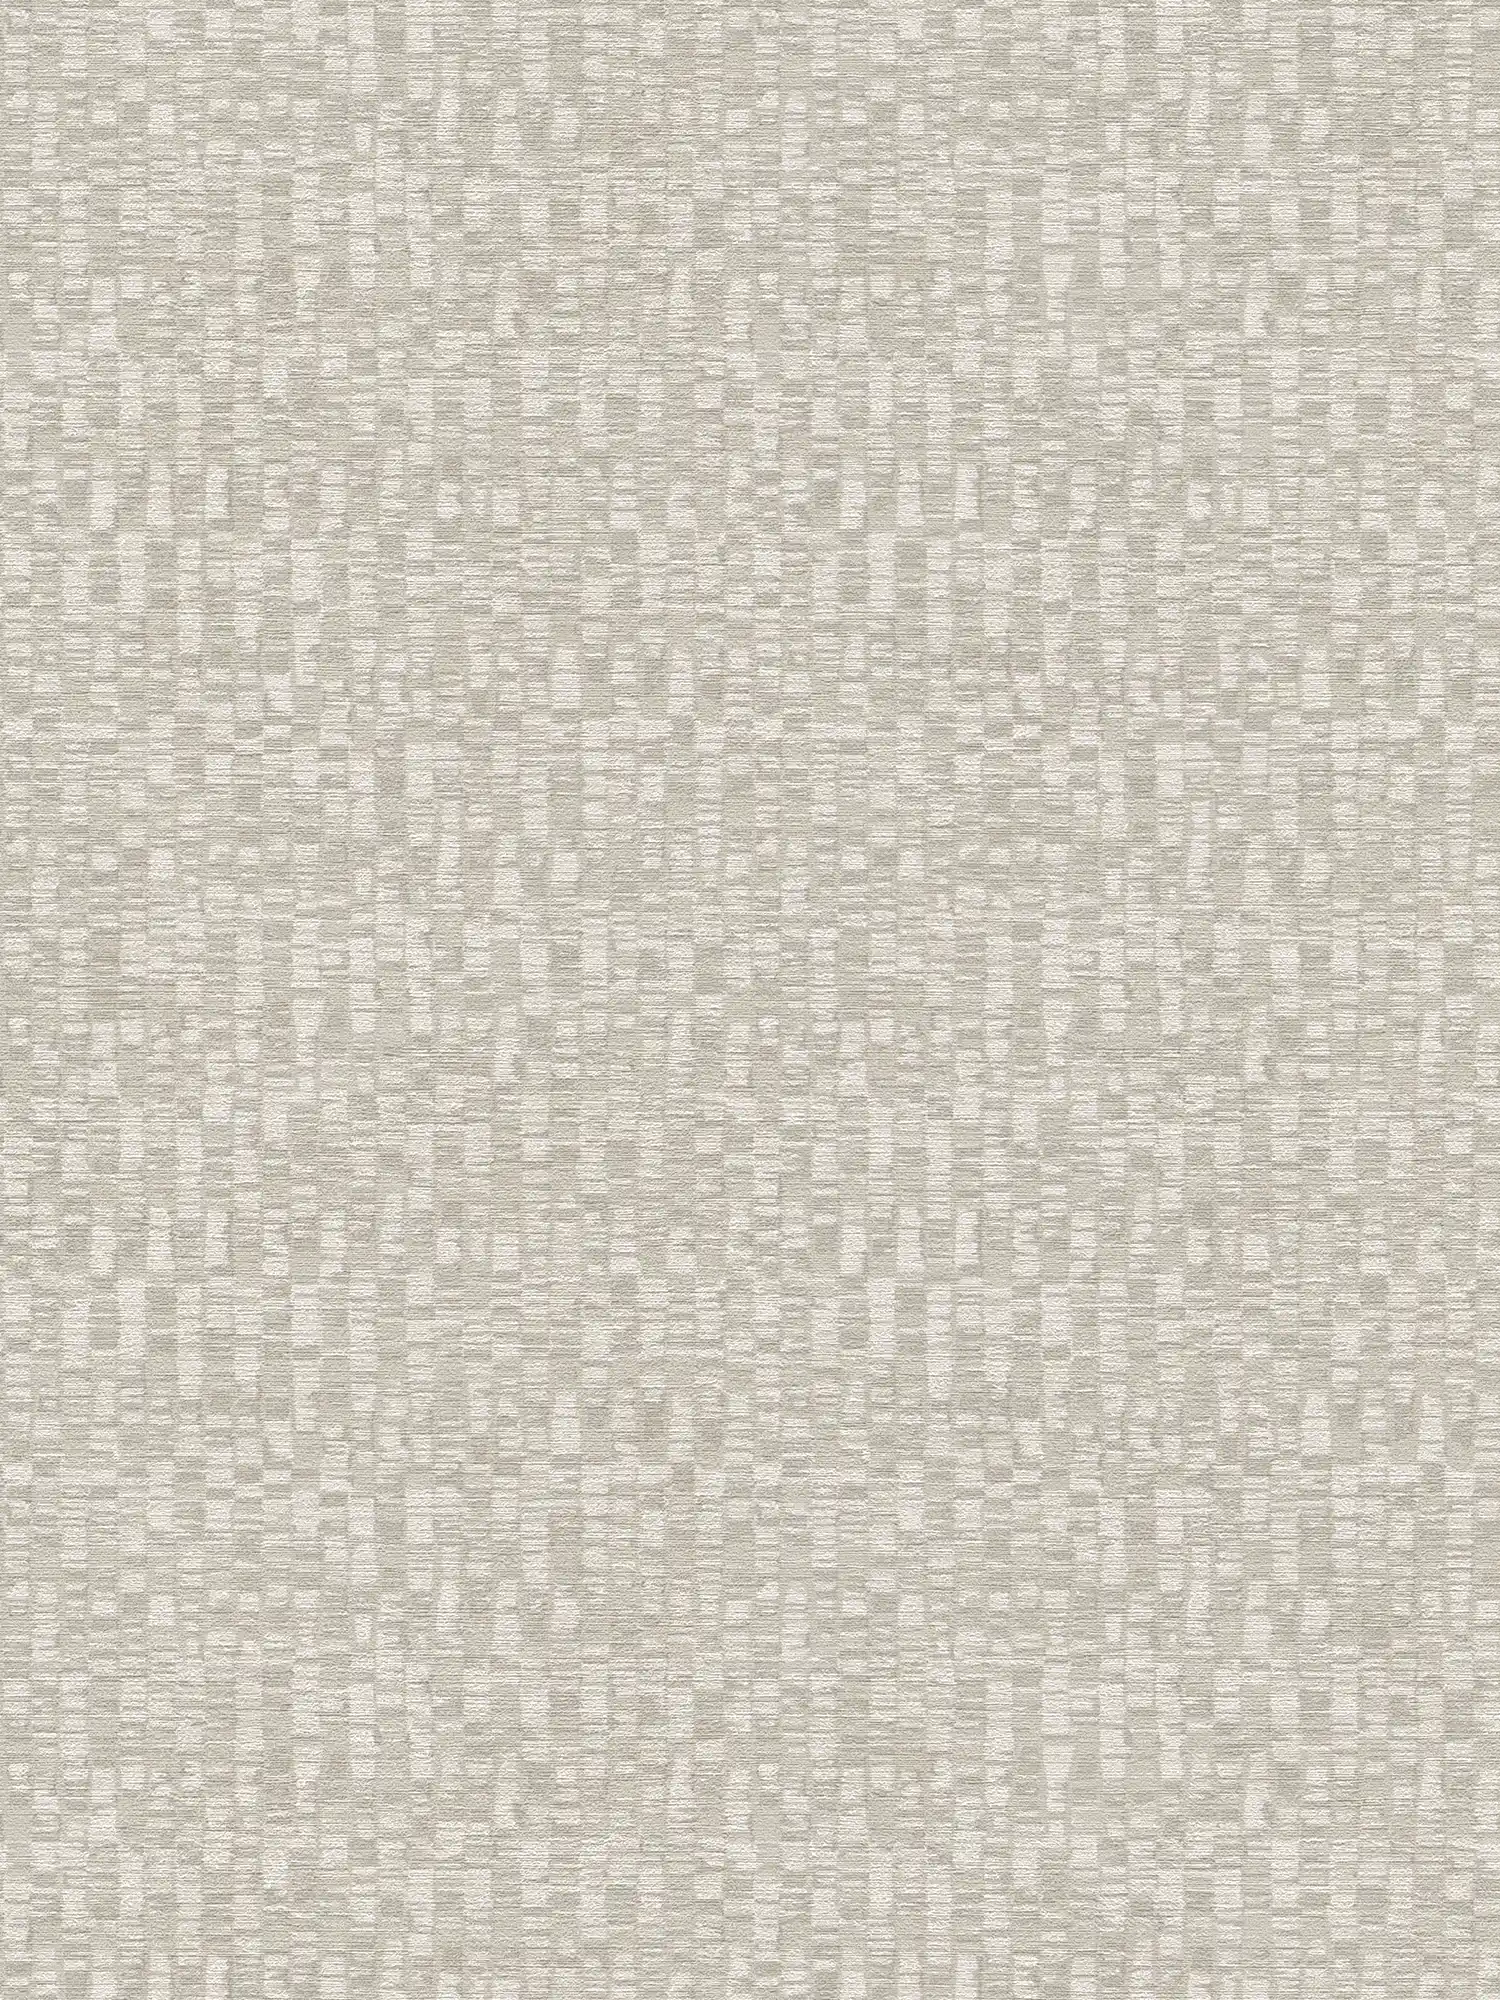 Vliestapete im Uni Look – Grau, Weiß
